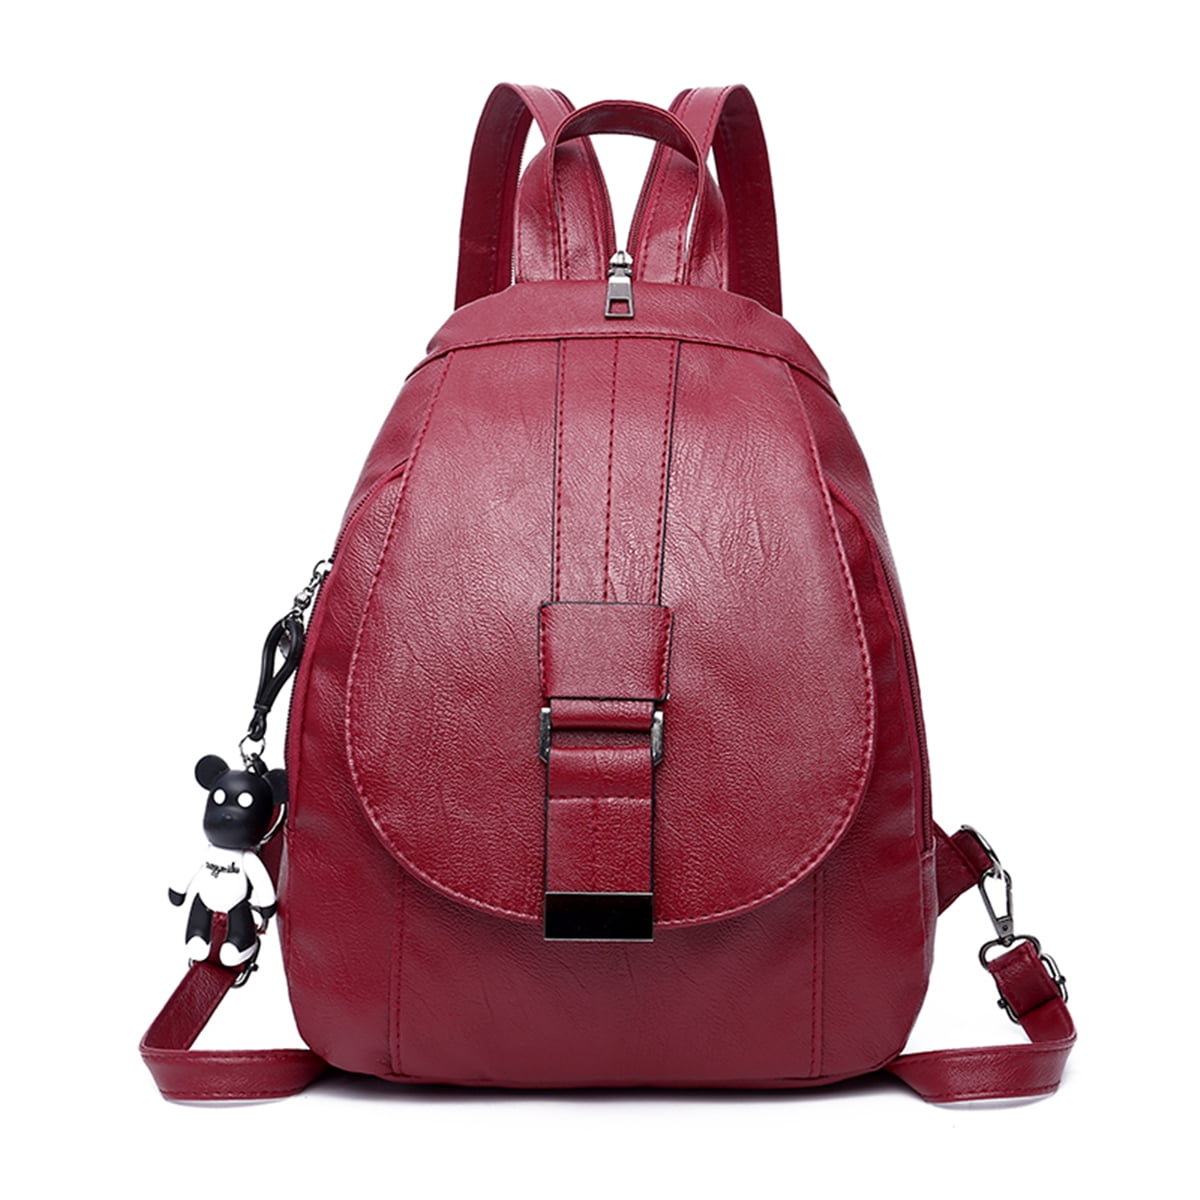 2019 Women Leather School Backpack Travel Handbag Satchel Rucksack ...